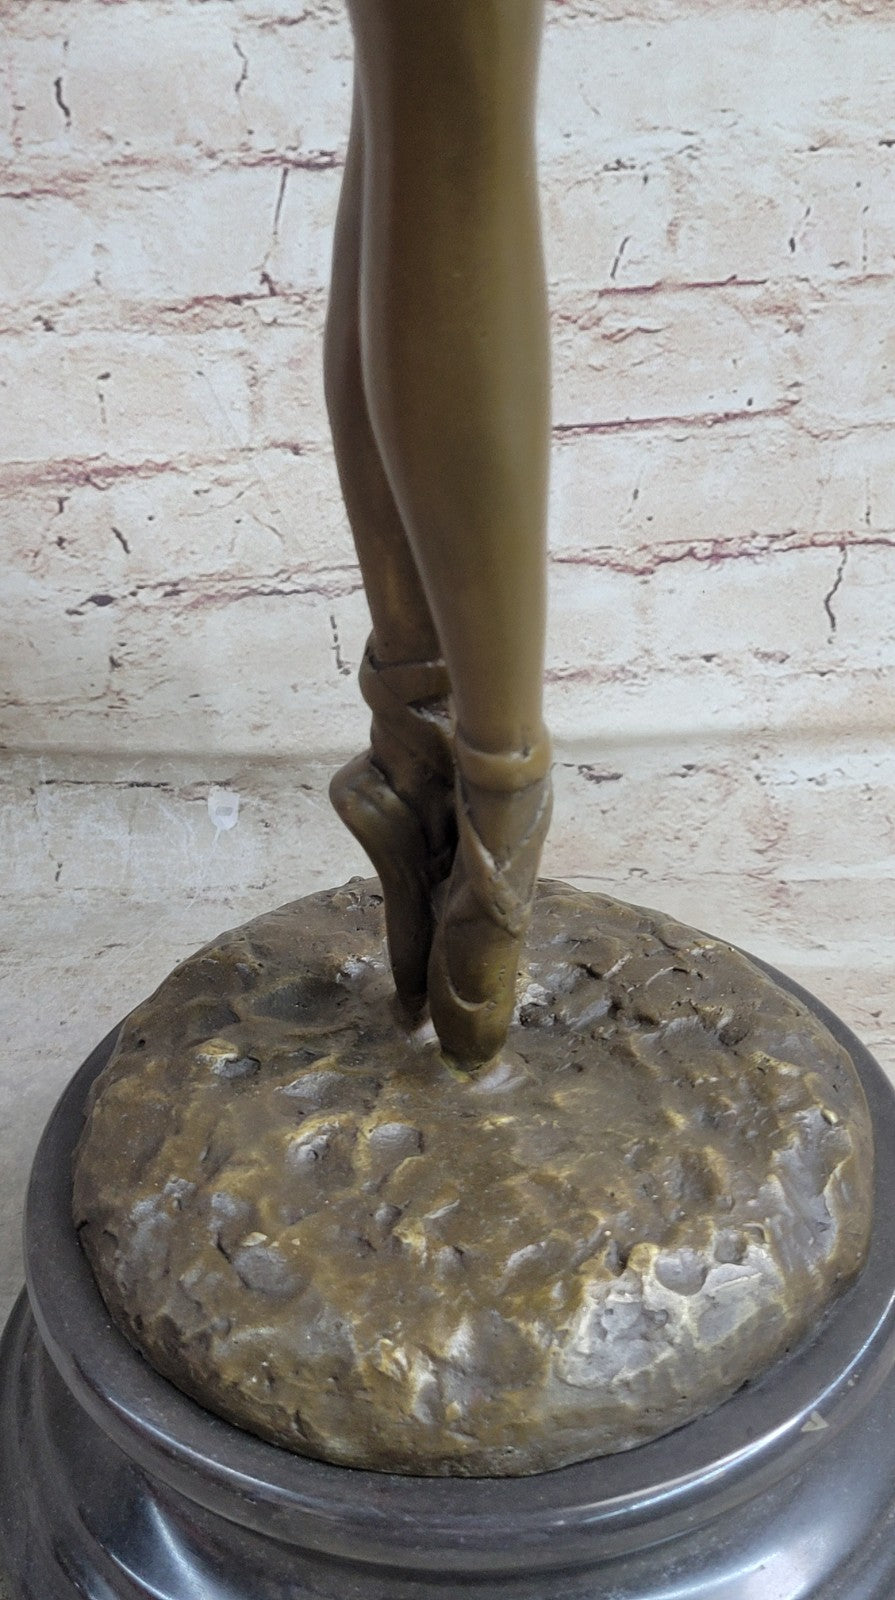 Sculpture by Swiss Artist Collet Bronze w/ Brown Patina Ballerina Limited Edition